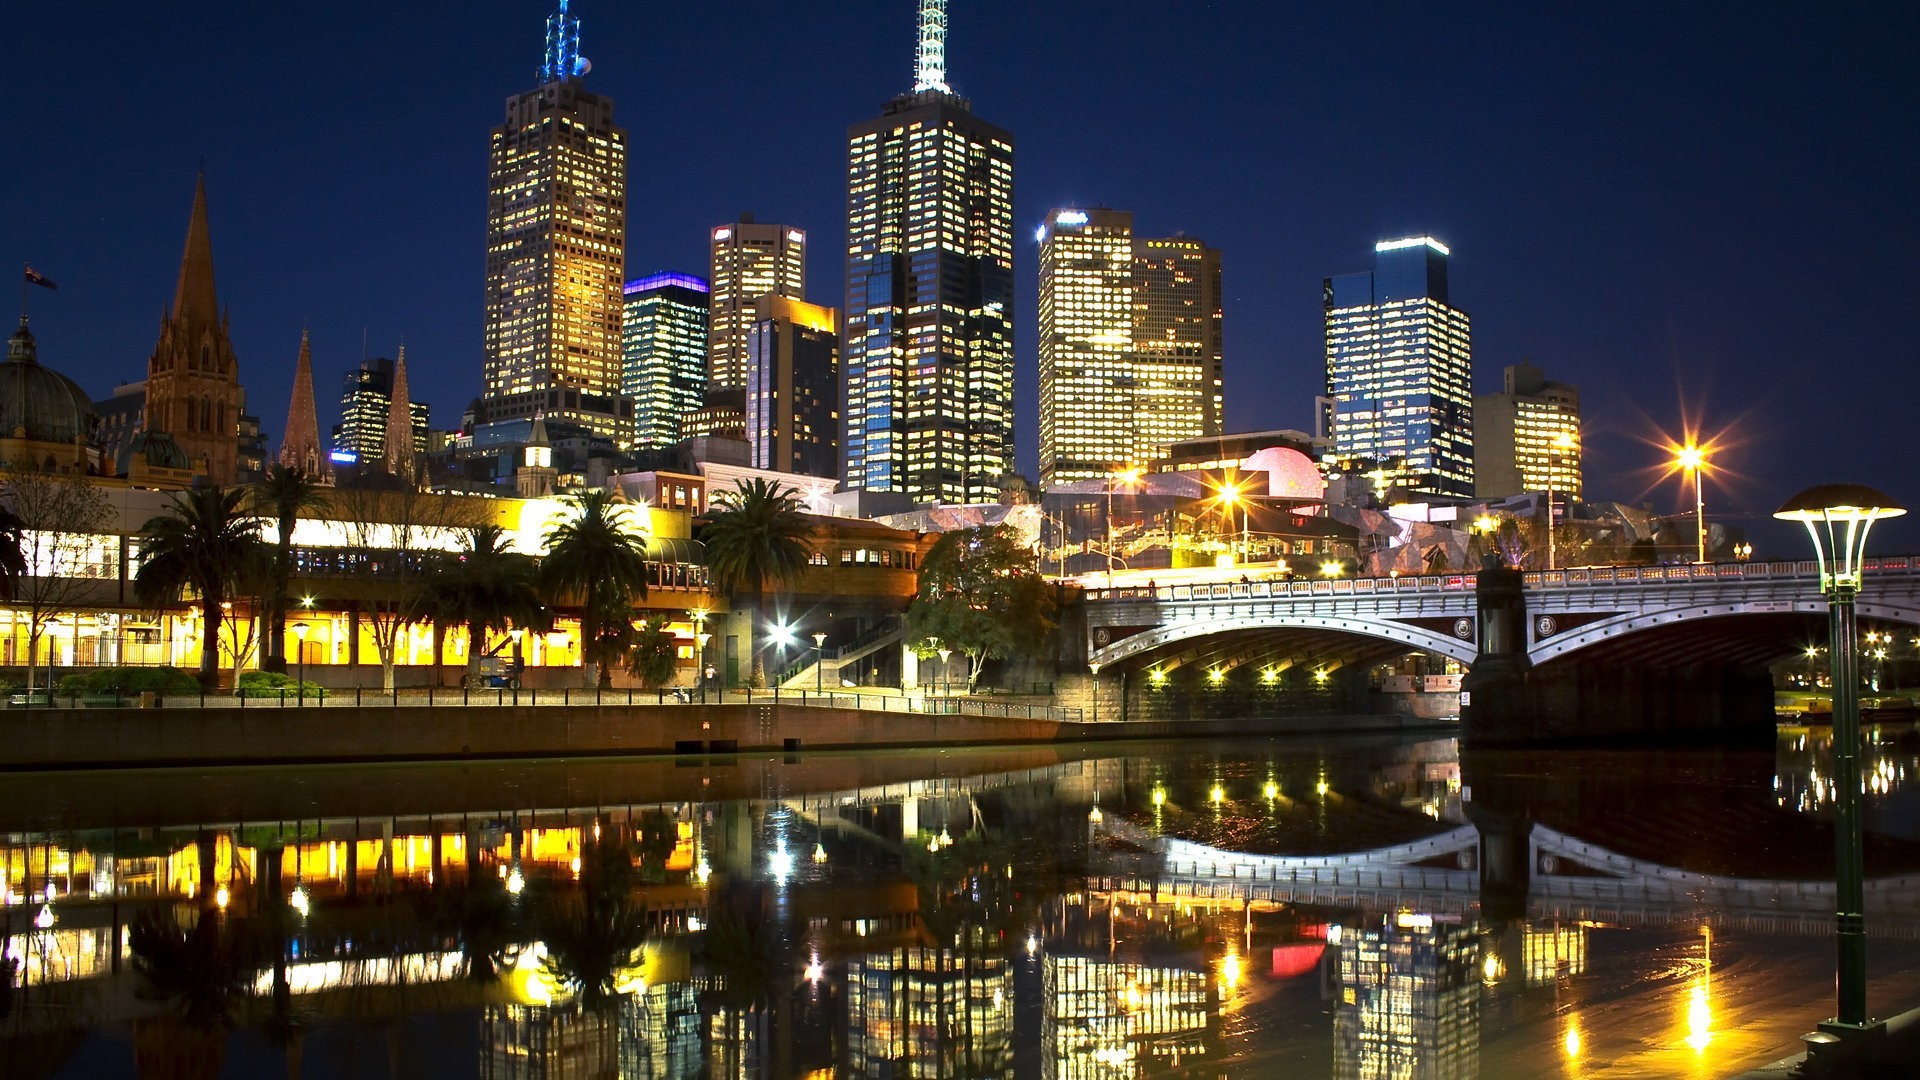 General 1920x1080 city cityscape bridge night lights reflection Melbourne Australia city lights